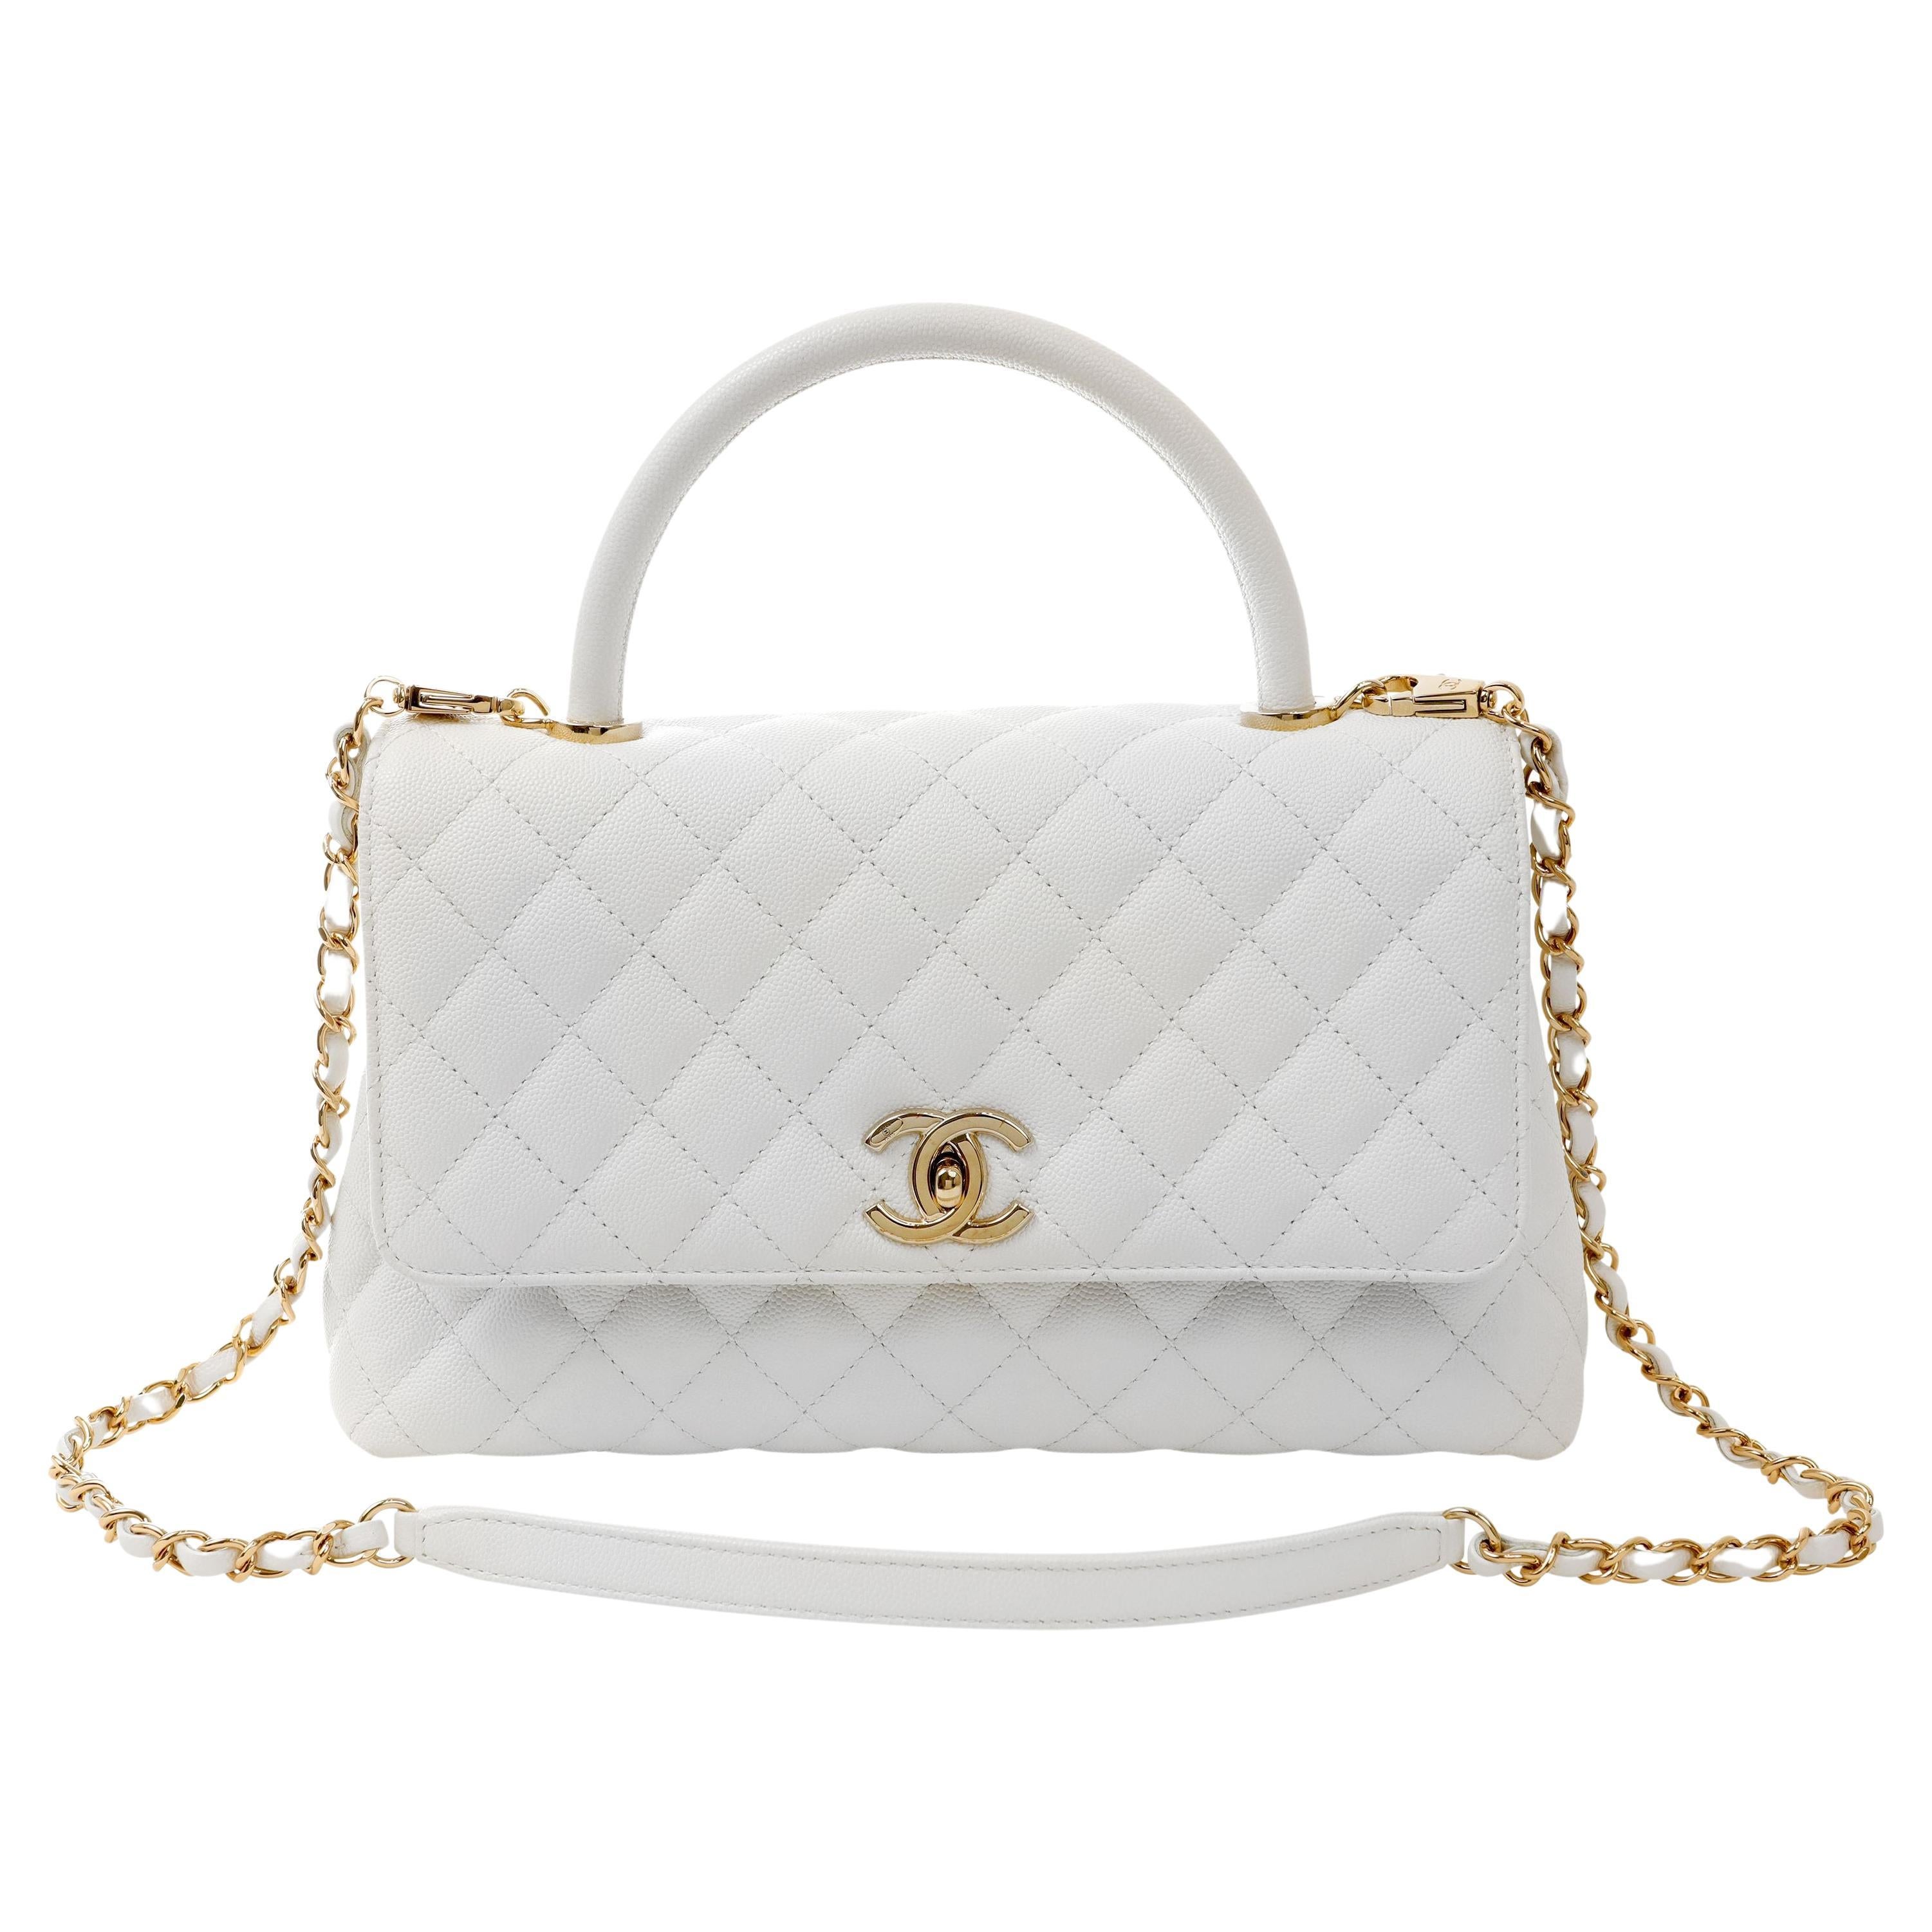 Chanel Bag With Handle - 854 For Sale on 1stDibs